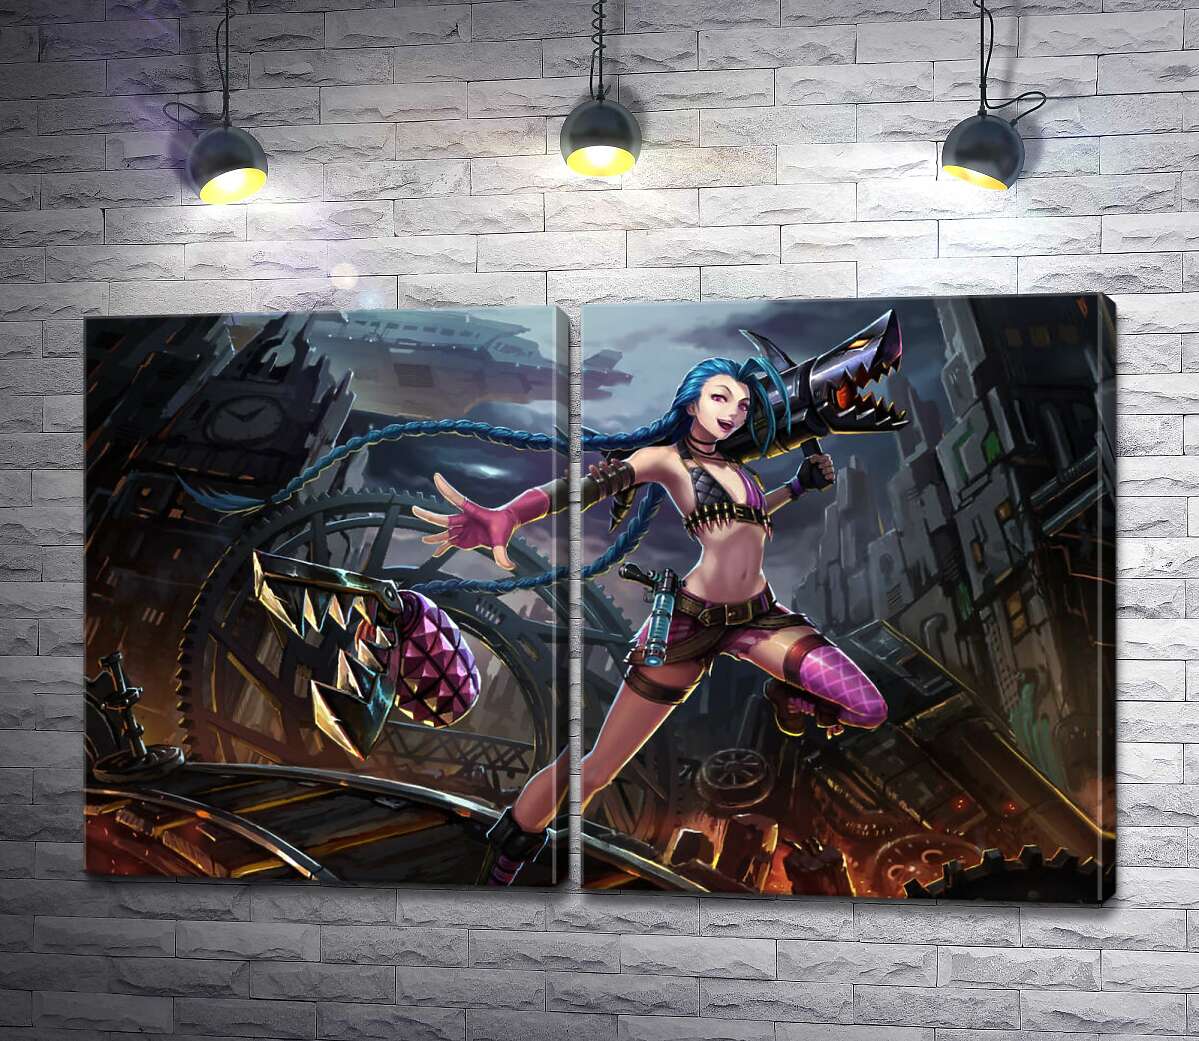 модульна картина Героїня гри League of Legends, хуліганка Джинкс, на фоні зруйнованого міста